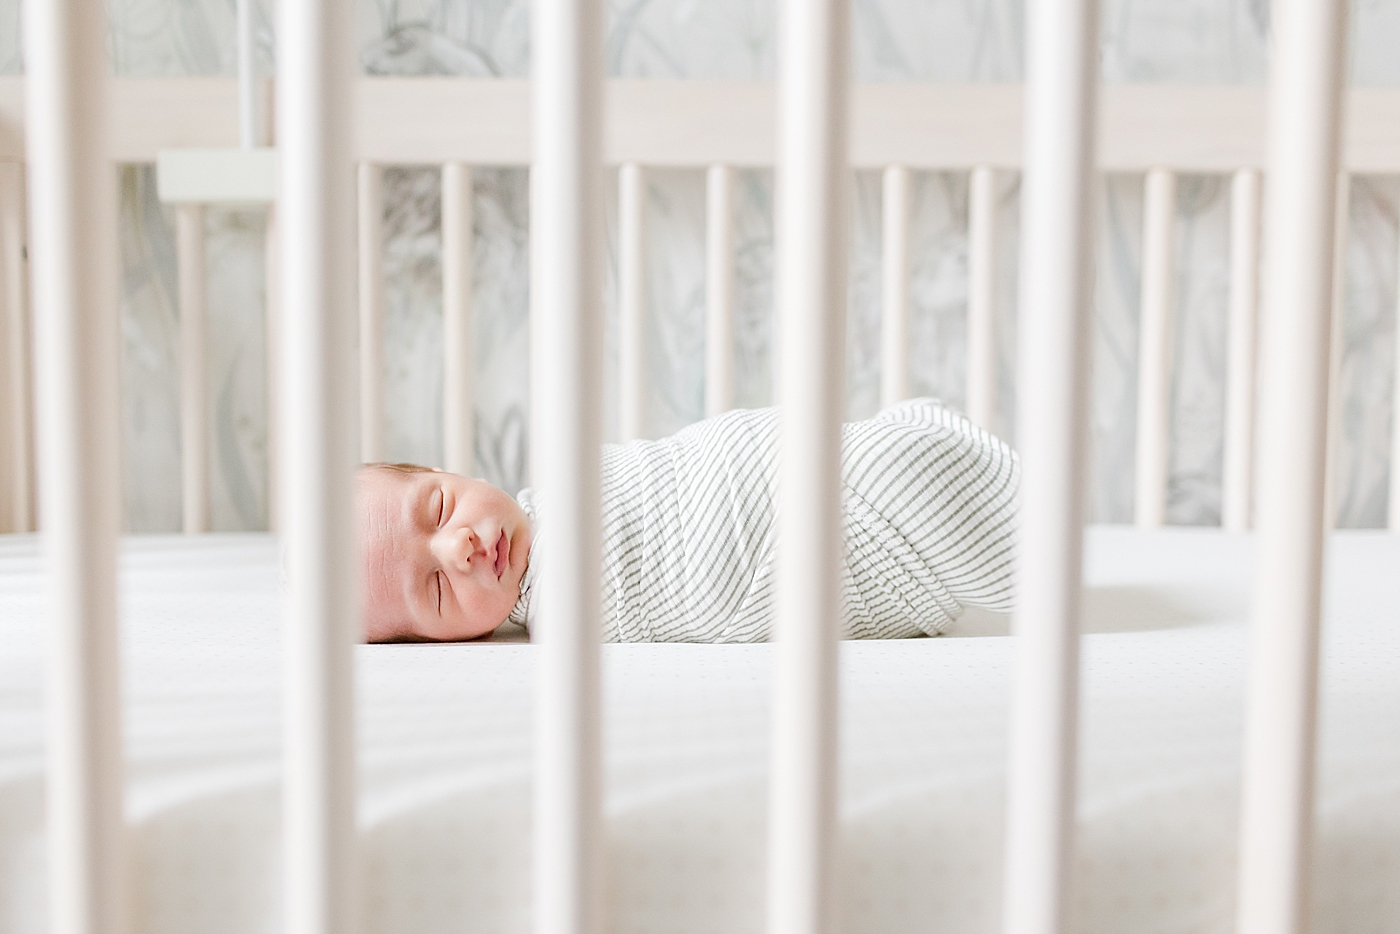 Sleeping newborn baby through crib slats | Image by Emily Gerald Photography